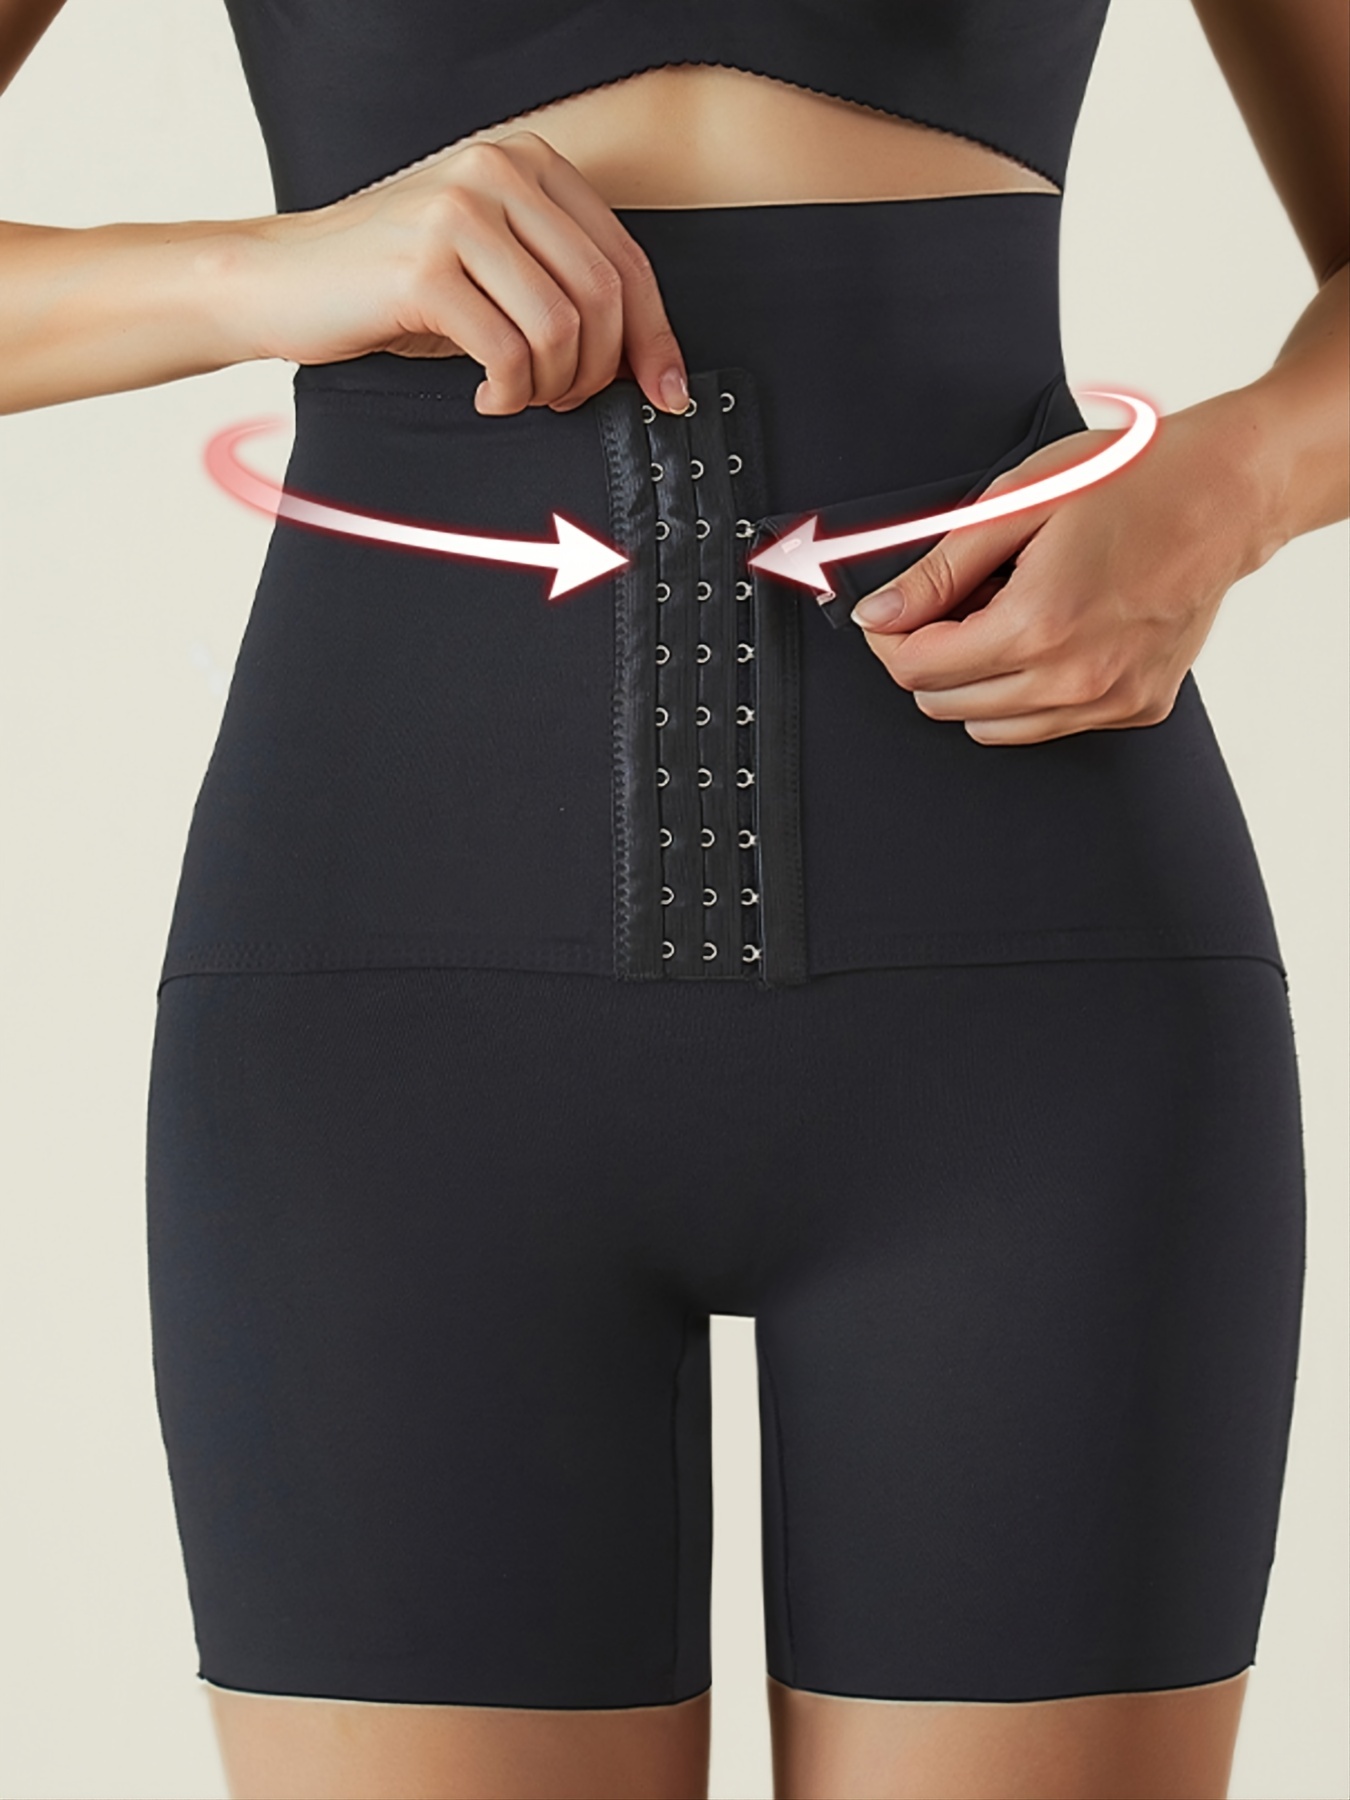 Visible Shape Brief Shapewear 3 Pack Panties - Black/combo